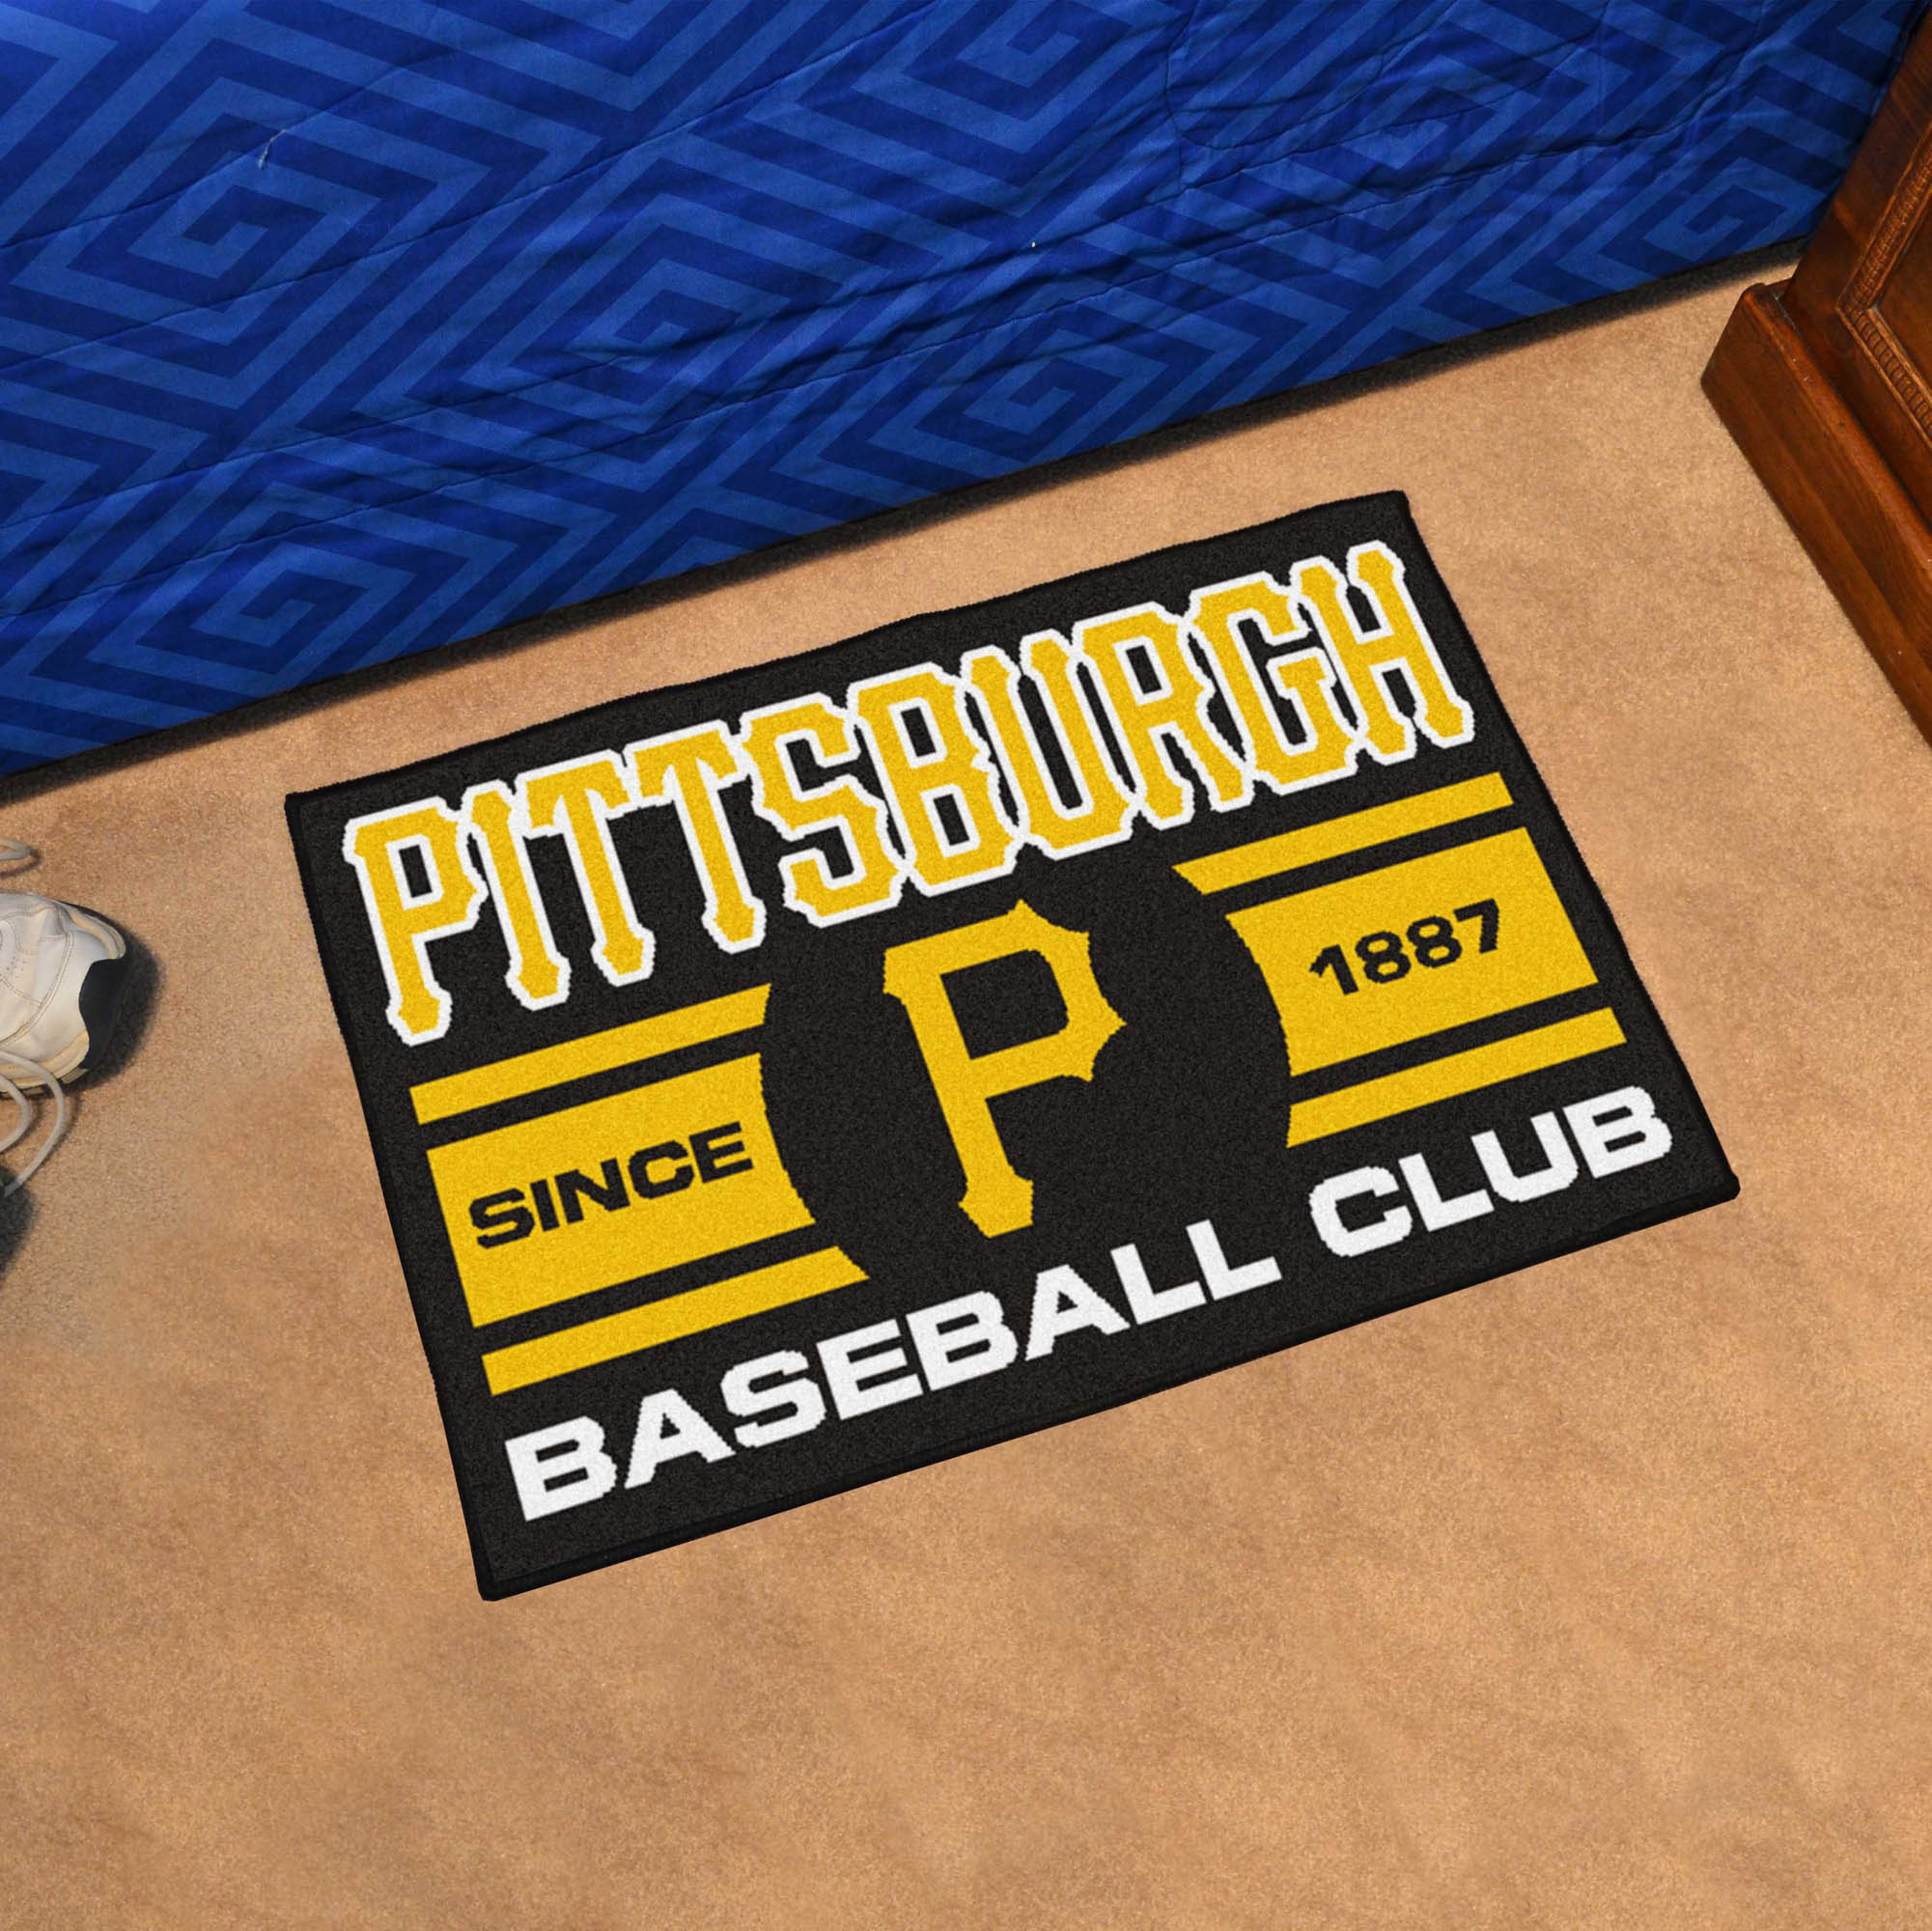 Pittsburgh Pirates Baseball Club Doormat – 19 x 30